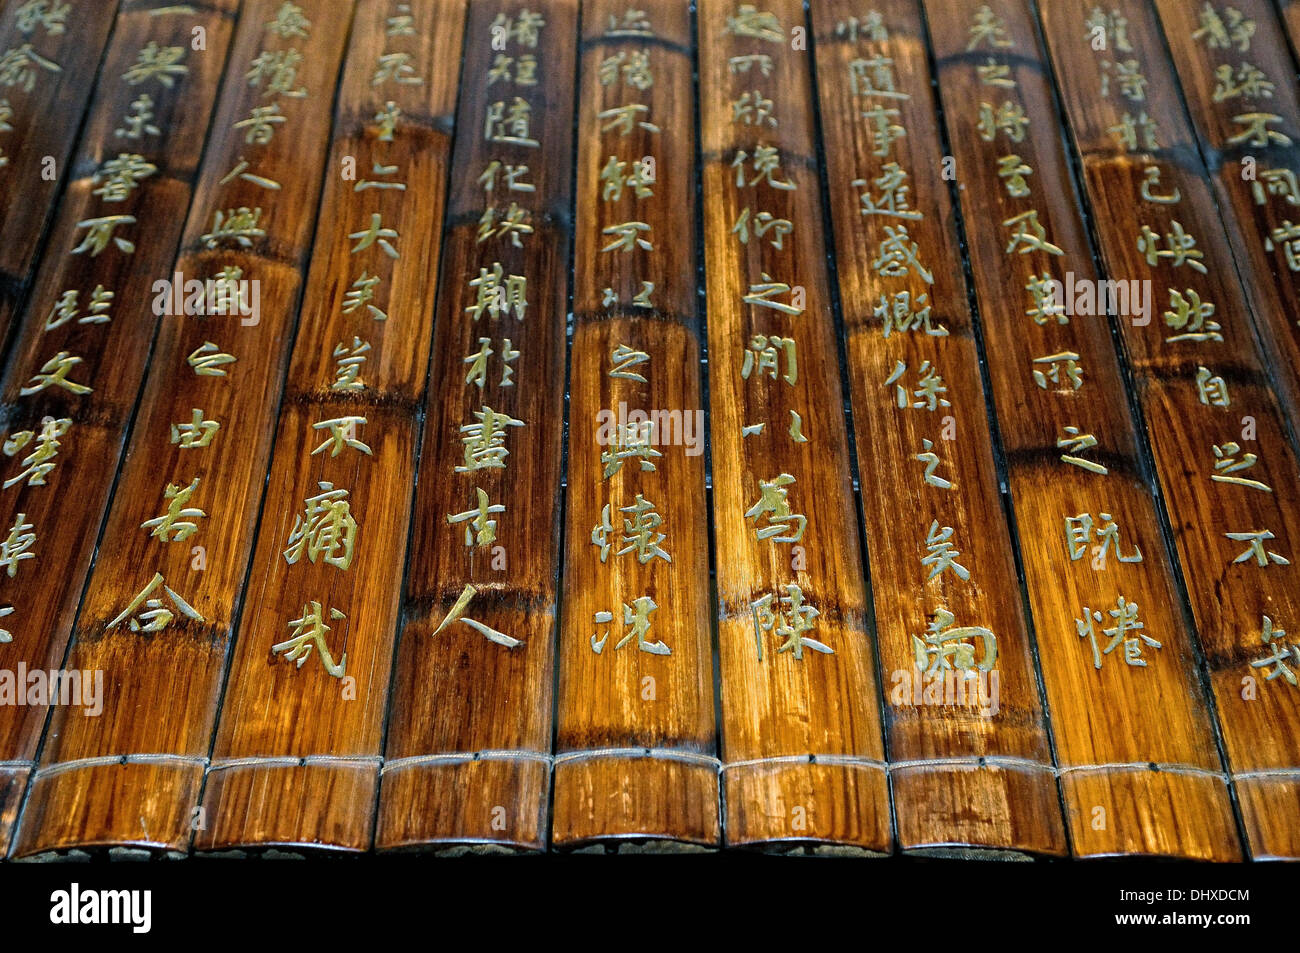 Chinese writing on wood panels Stock Photo